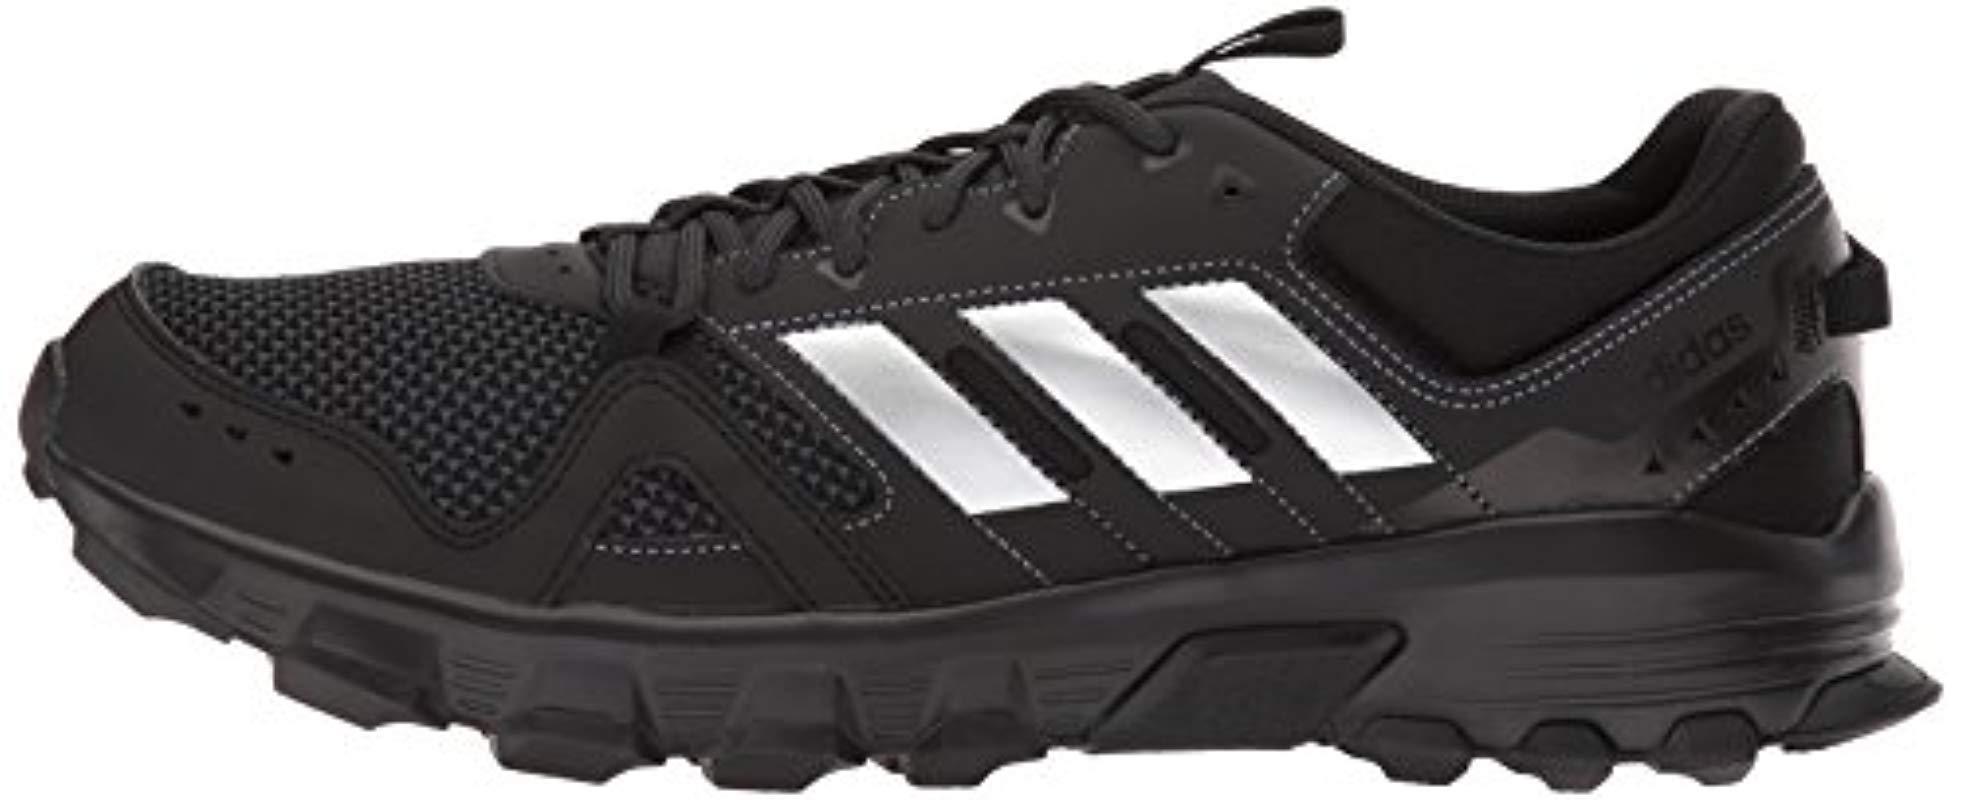 Lyst - adidas Rockadia M Trail Running Shoe, Core Black/matte Silver ...